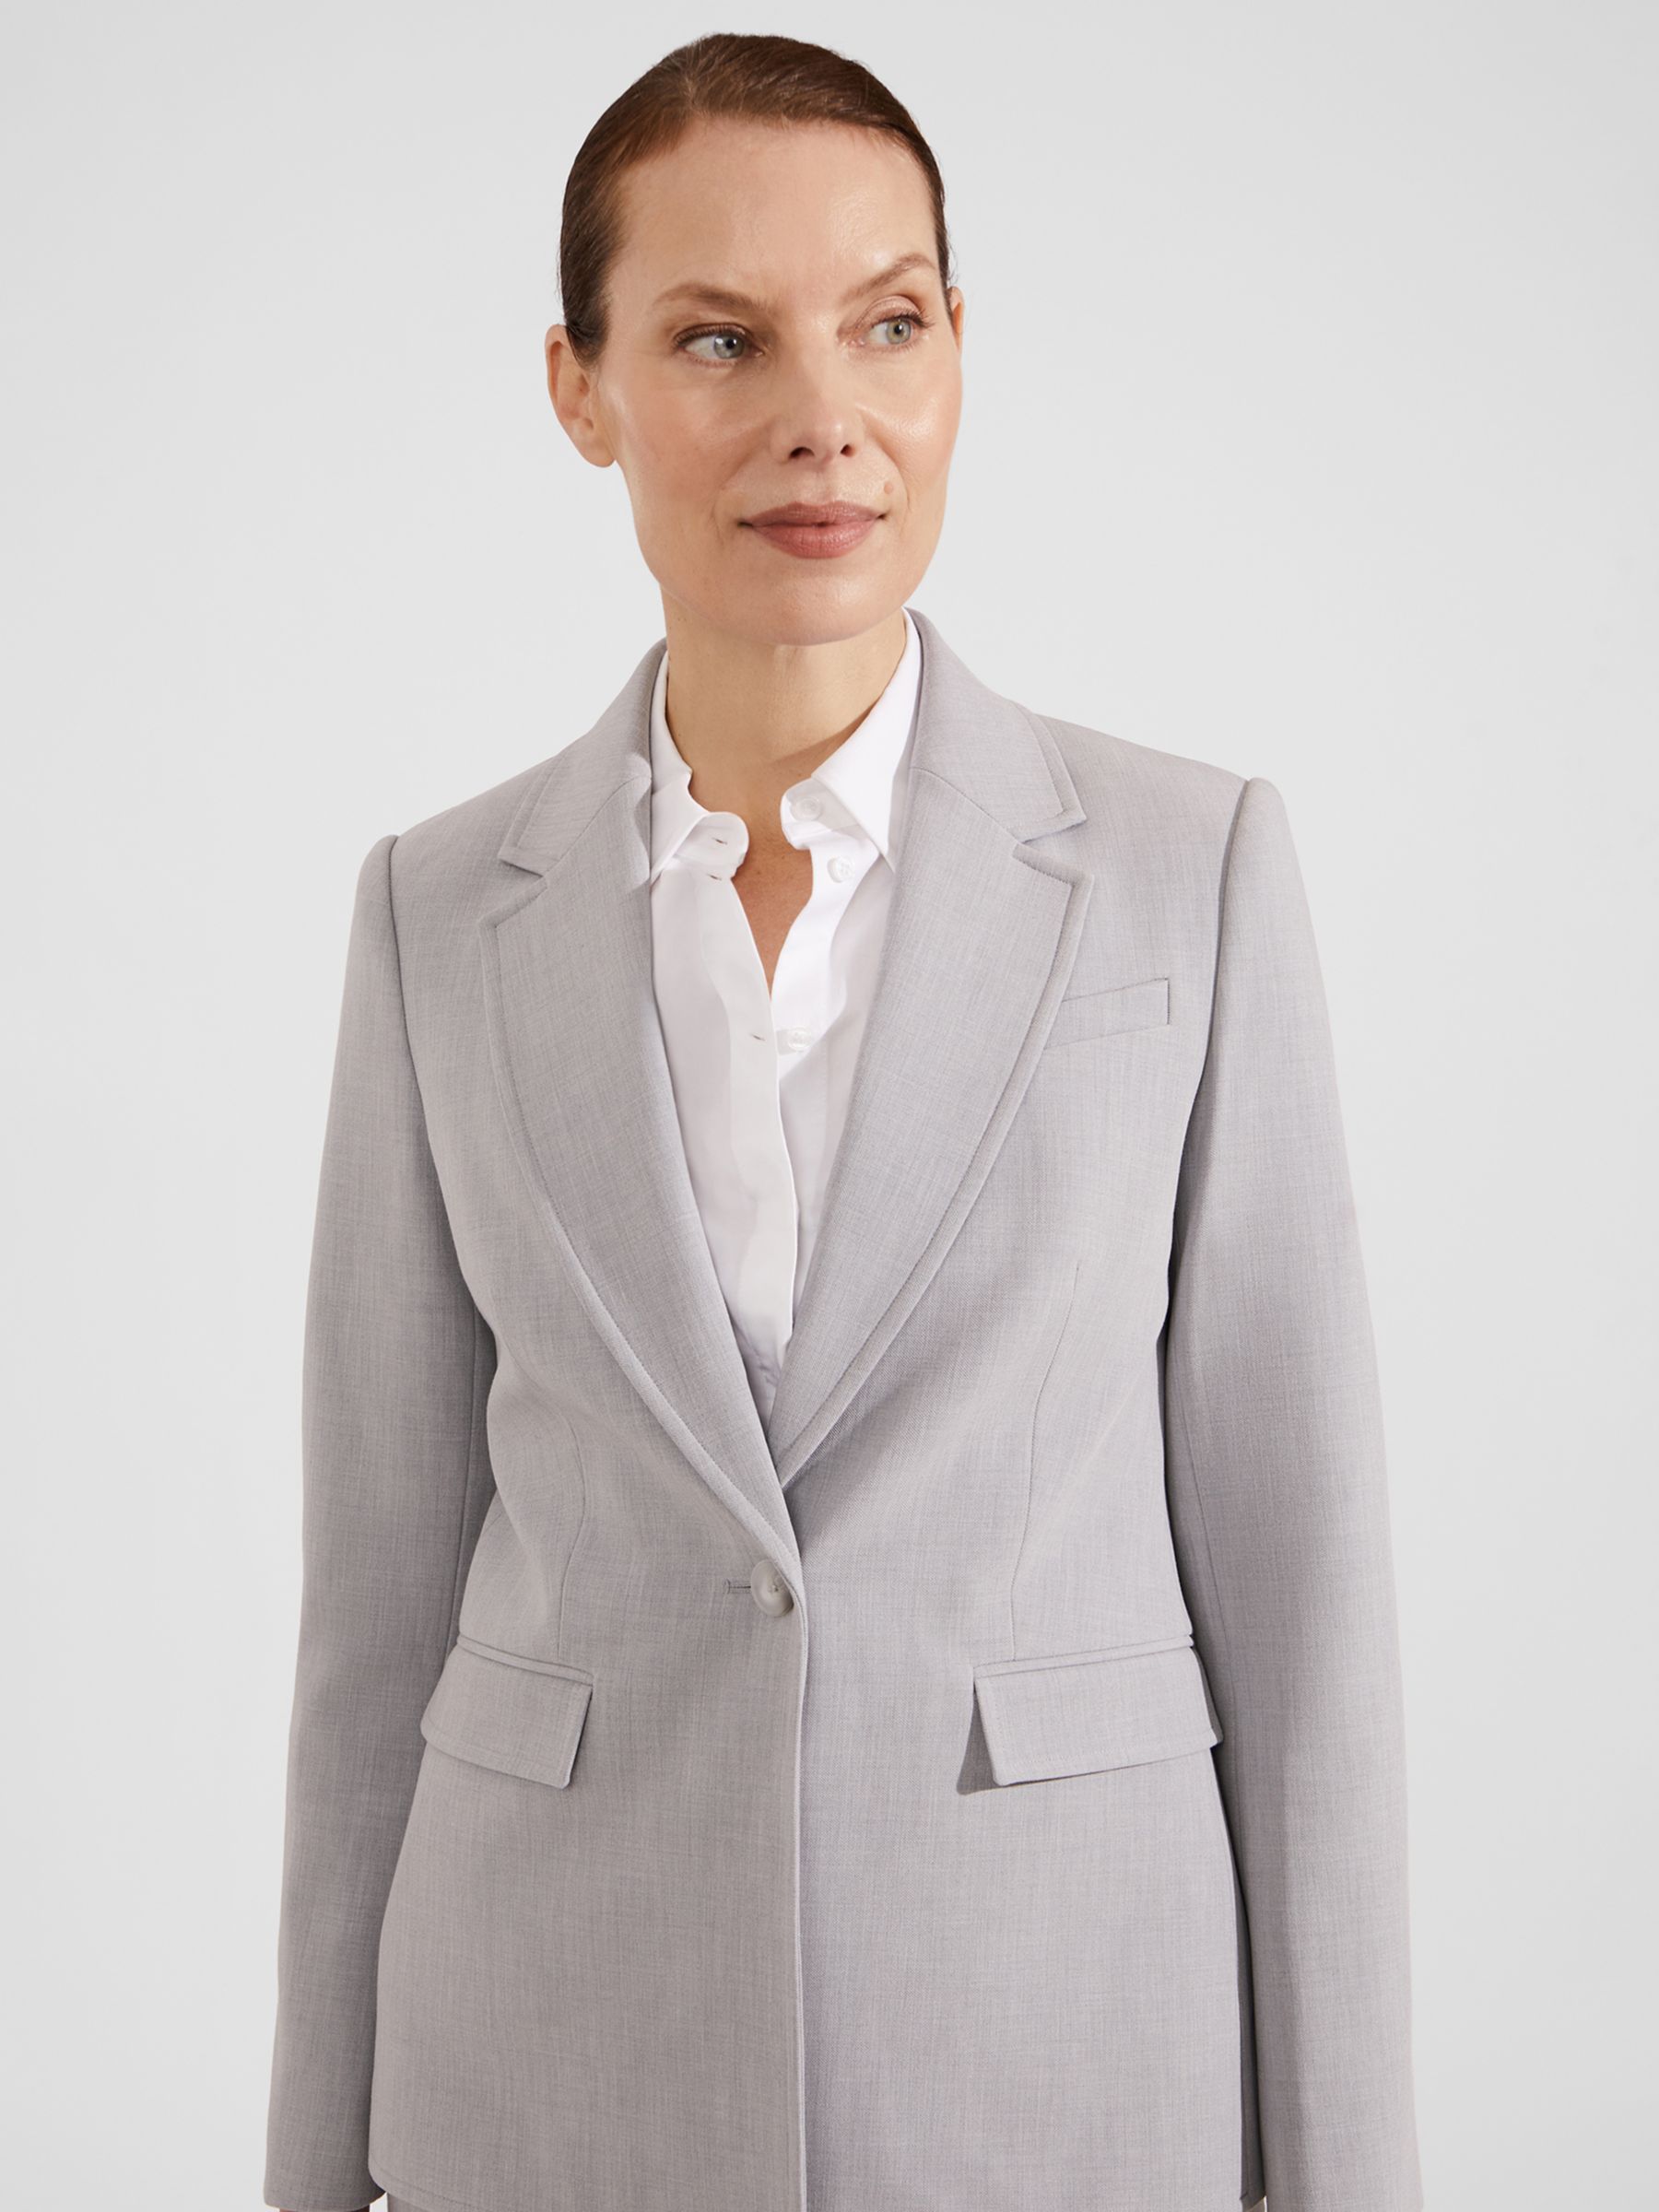 Buy Hobbs Lauren Tailored Jacket, Pale Grey Online at johnlewis.com